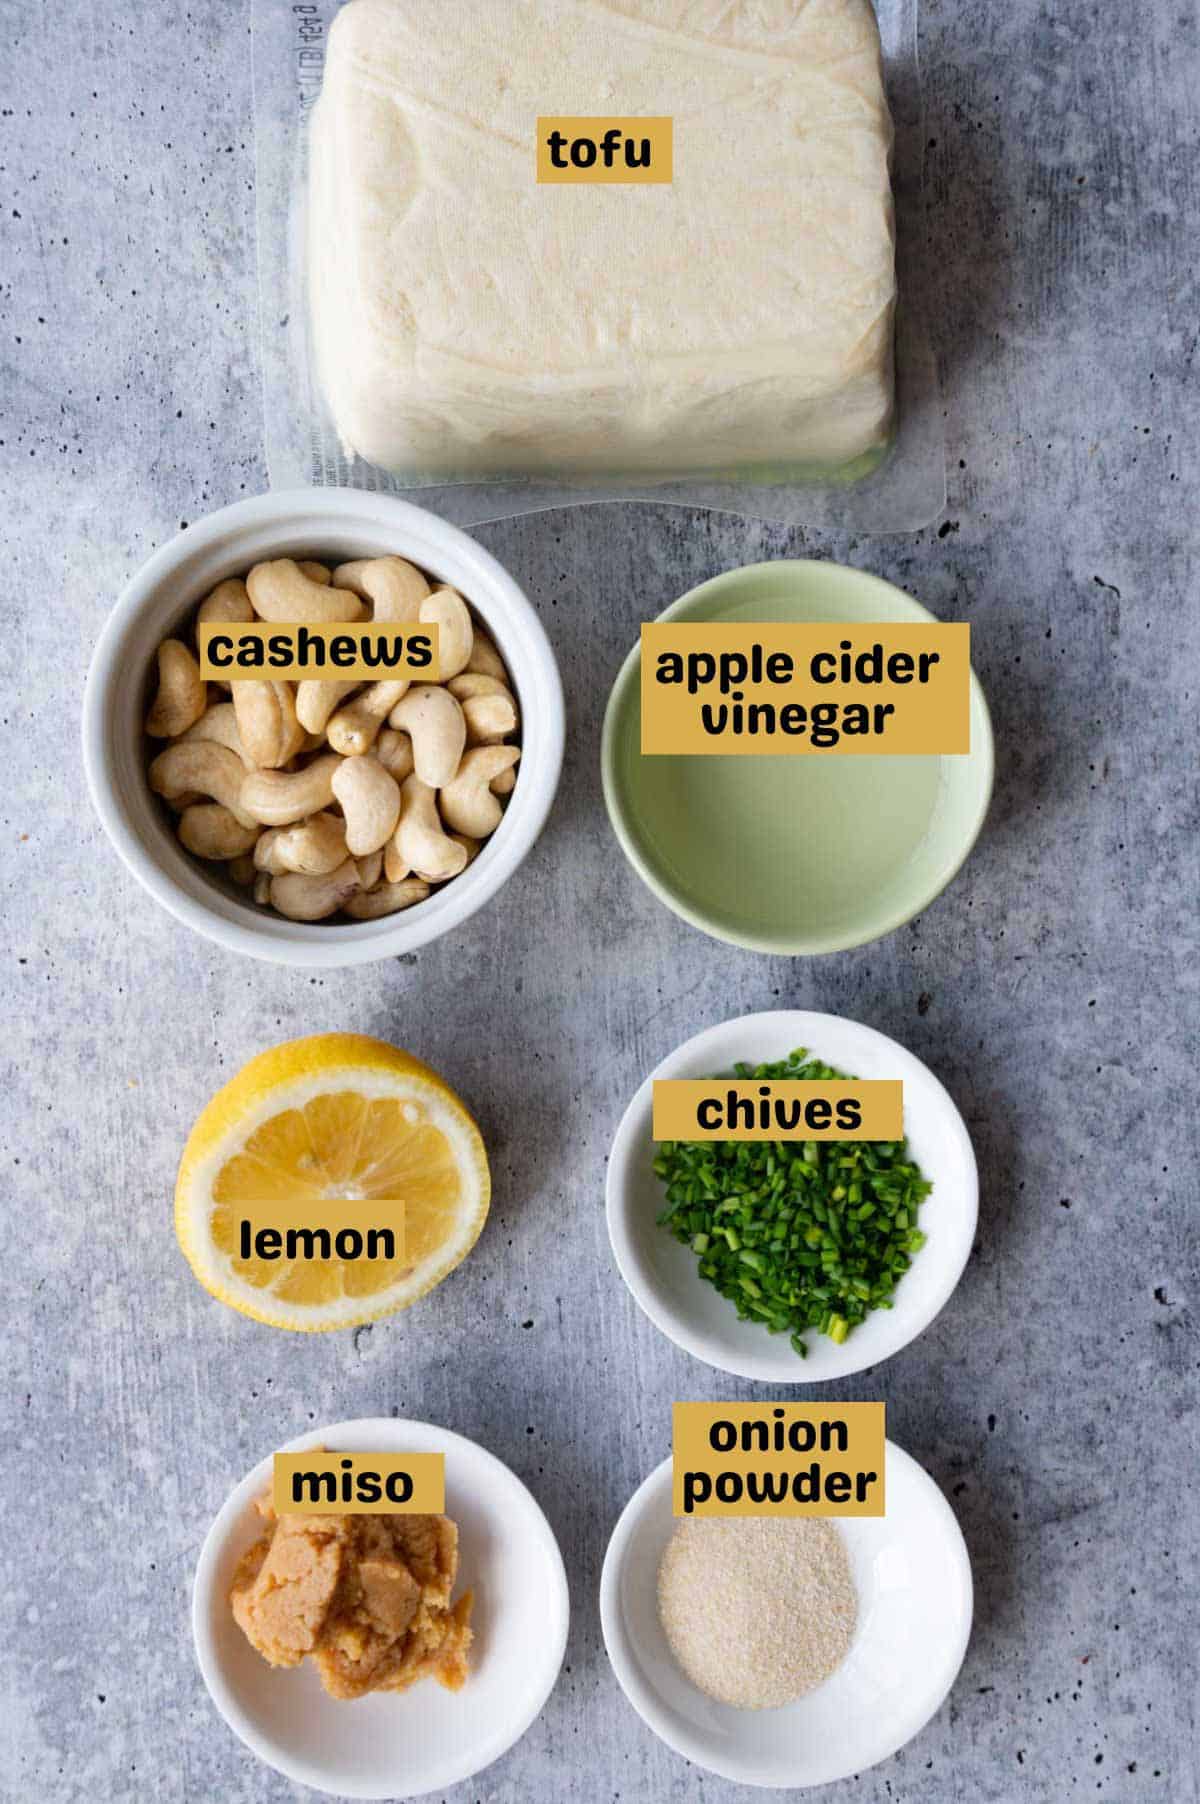 Tofu, cashews, apple cider vinegar, lemon juice, miso, onion powder, lemon, and miso on a gray backdrop.